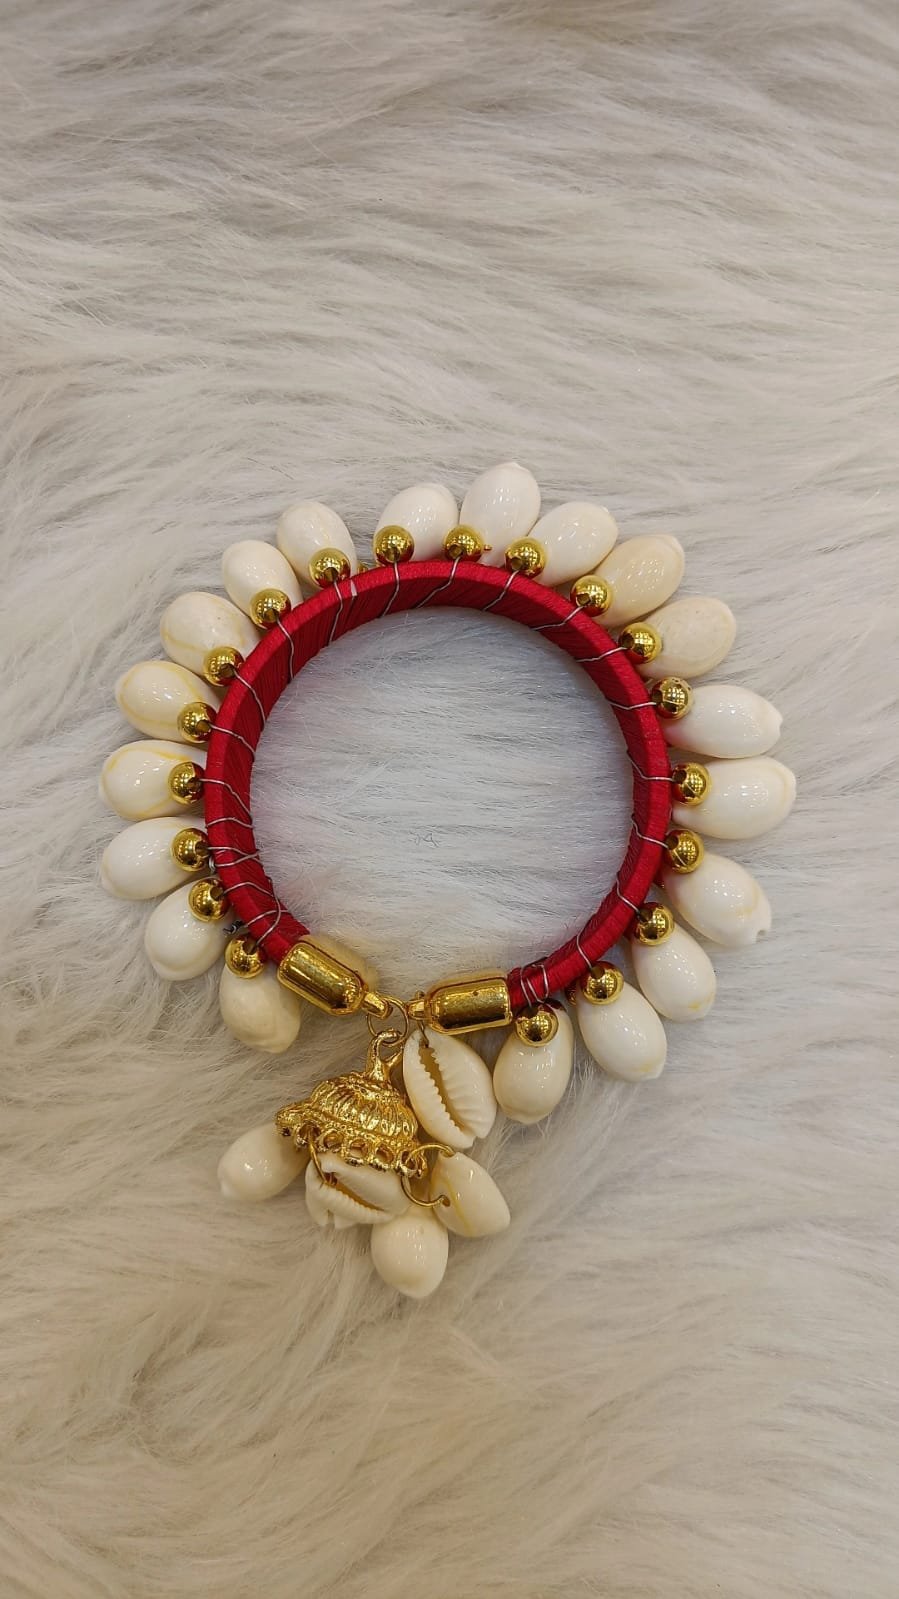 cowrie shell necklace macramé beige cord wooden beads handmade Hawaiian  style | eBay